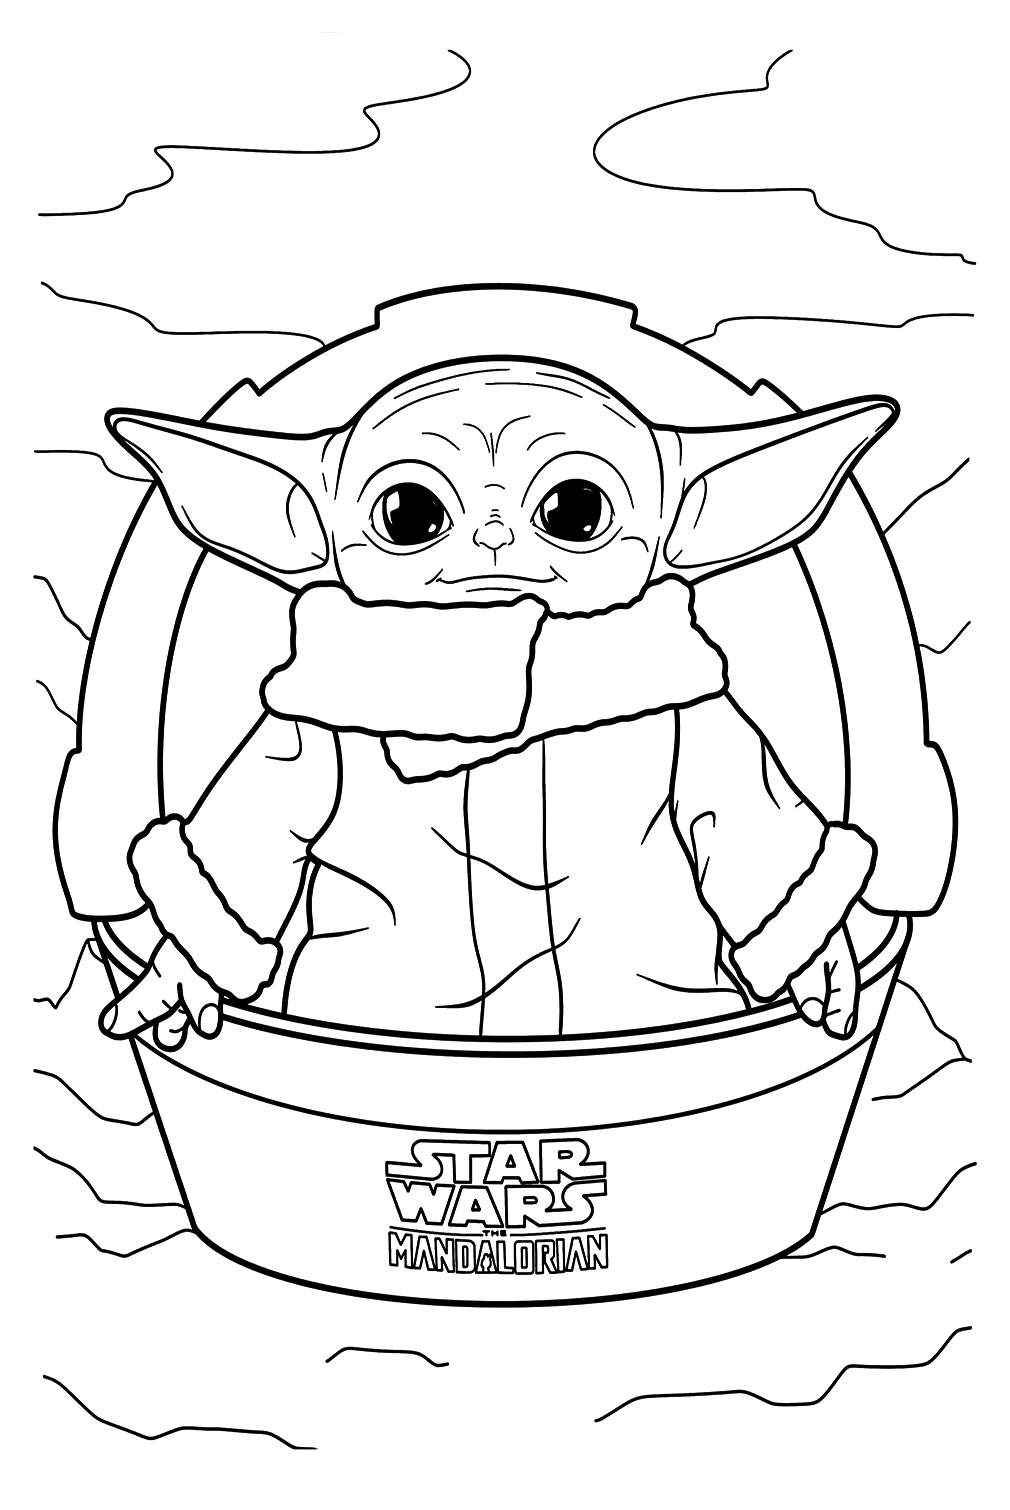 Baby Yoda imagem para colorir